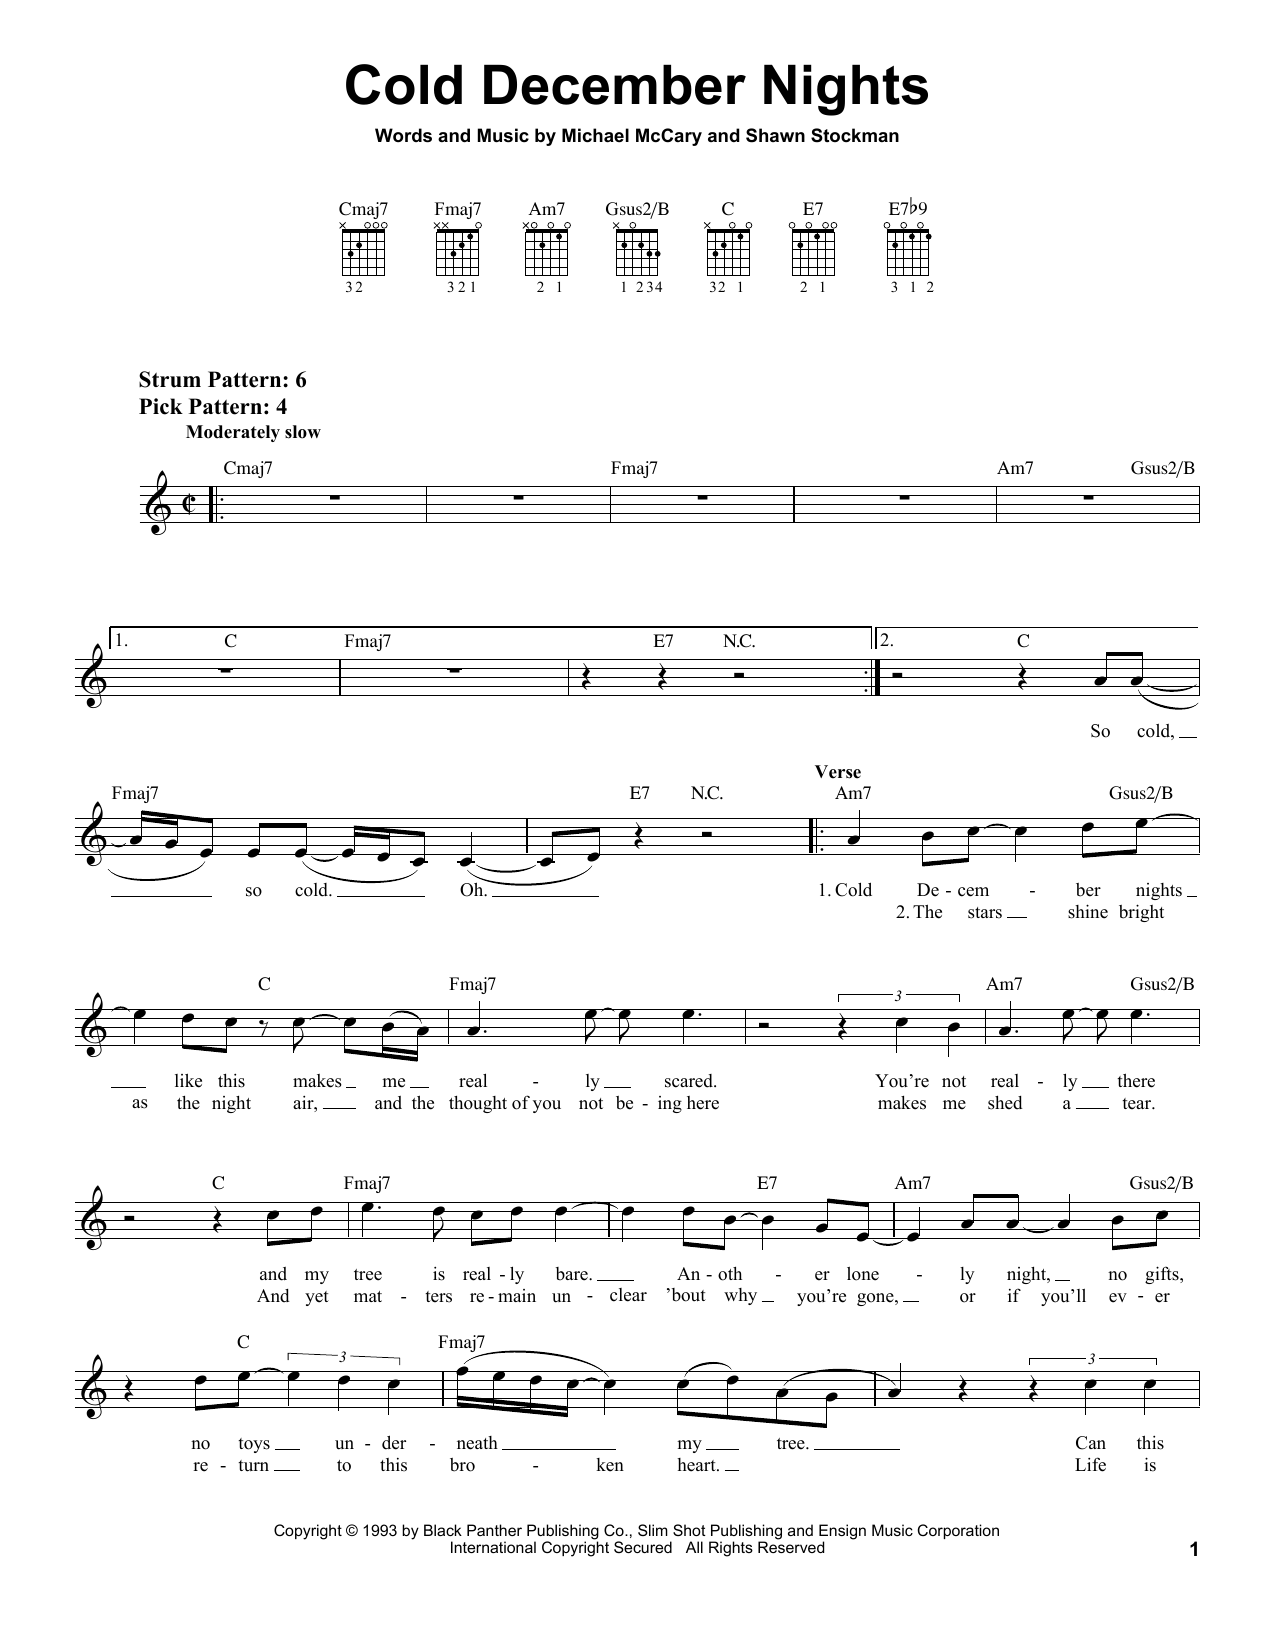 Boyz II Men Cold December Nights Sheet Music Notes & Chords for Violin - Download or Print PDF